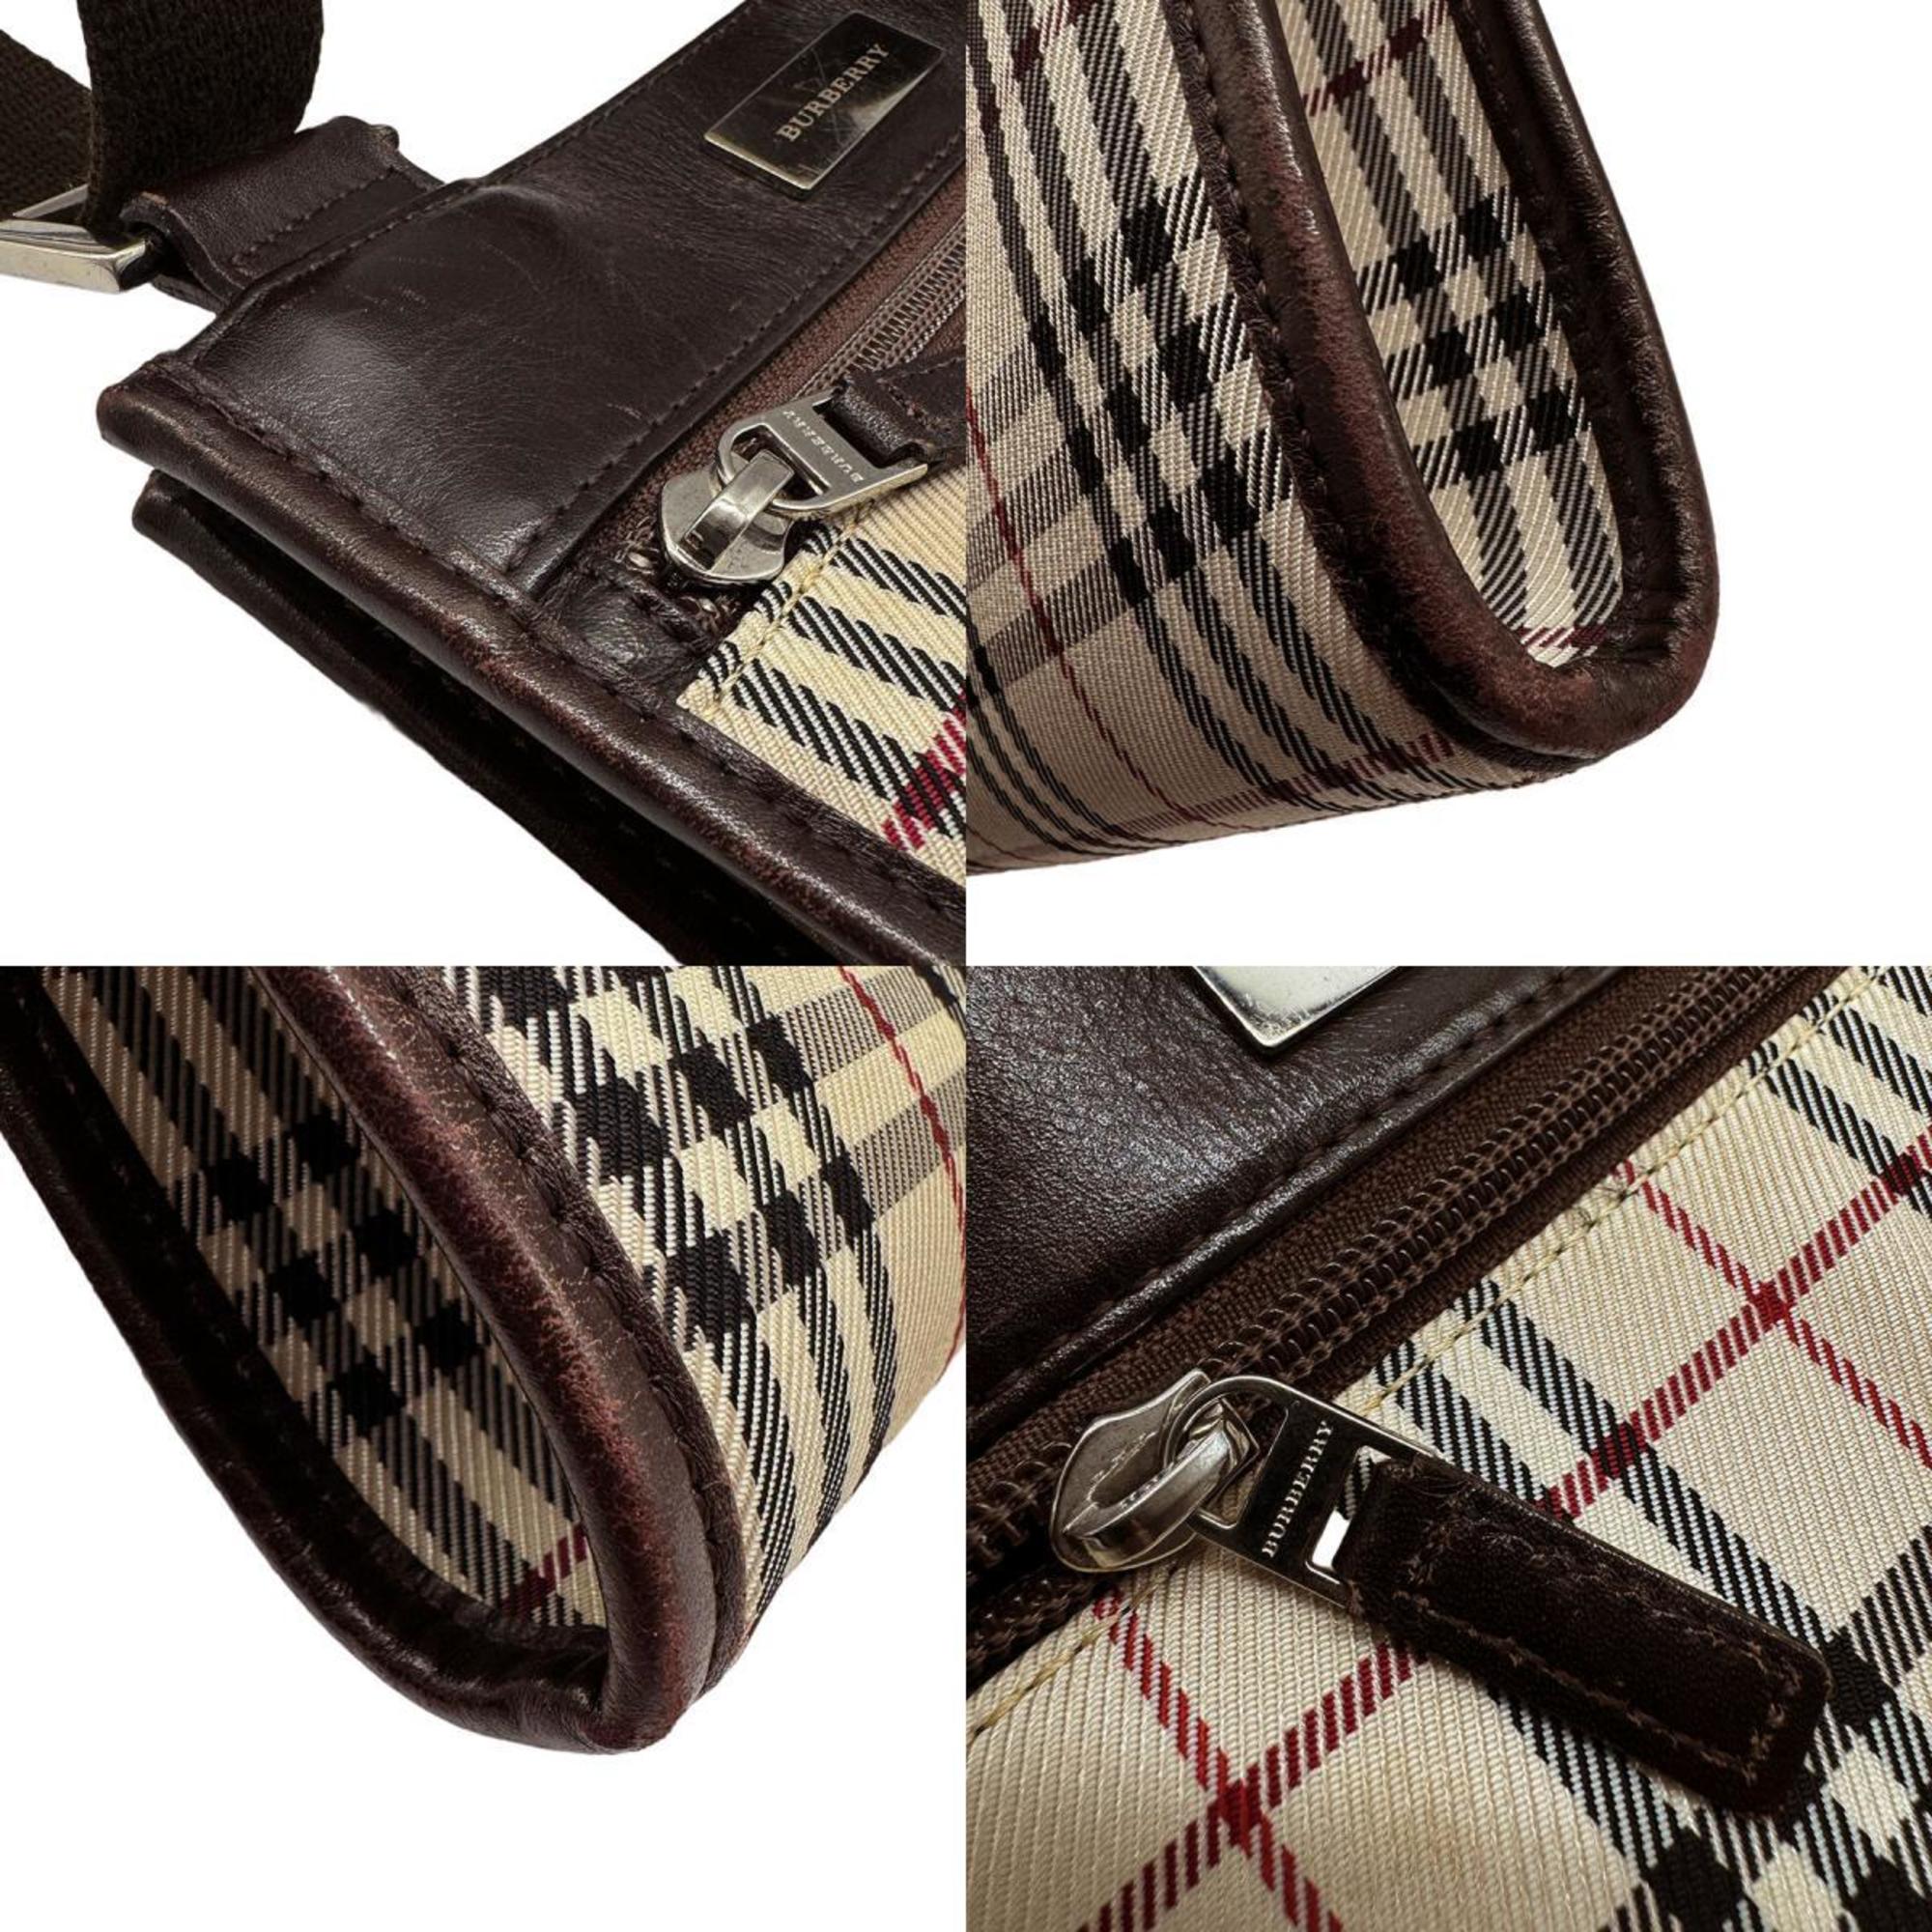 Burberry Shoulder Bag Canvas/Leather Beige/Brown Unisex z0480